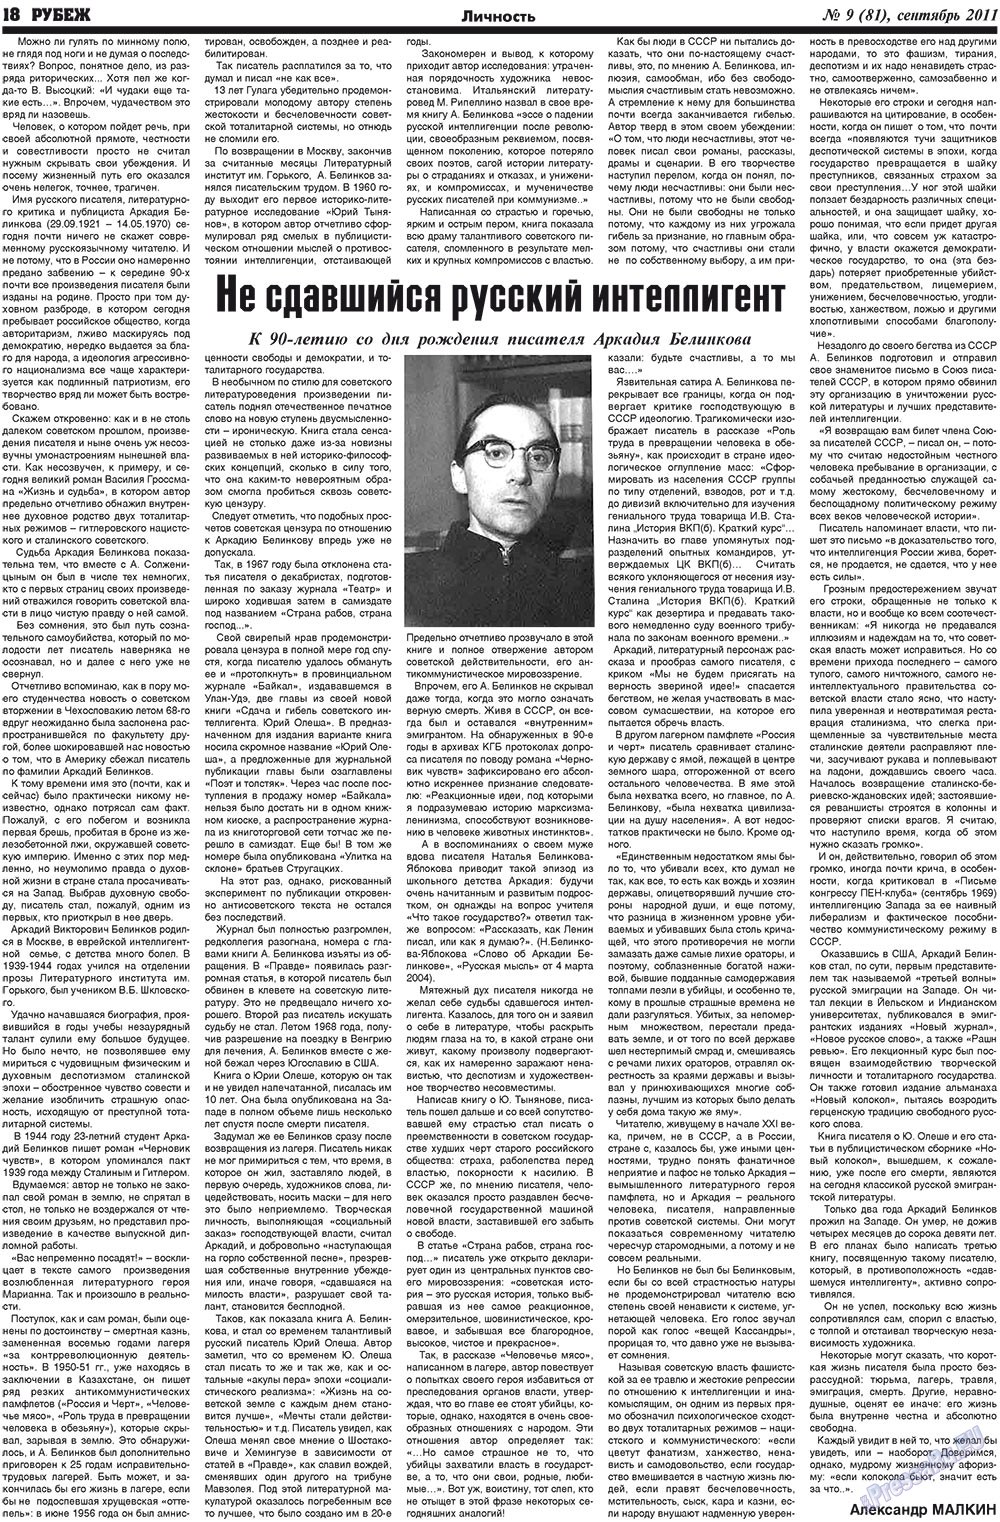 Рубеж, газета. 2011 №9 стр.18